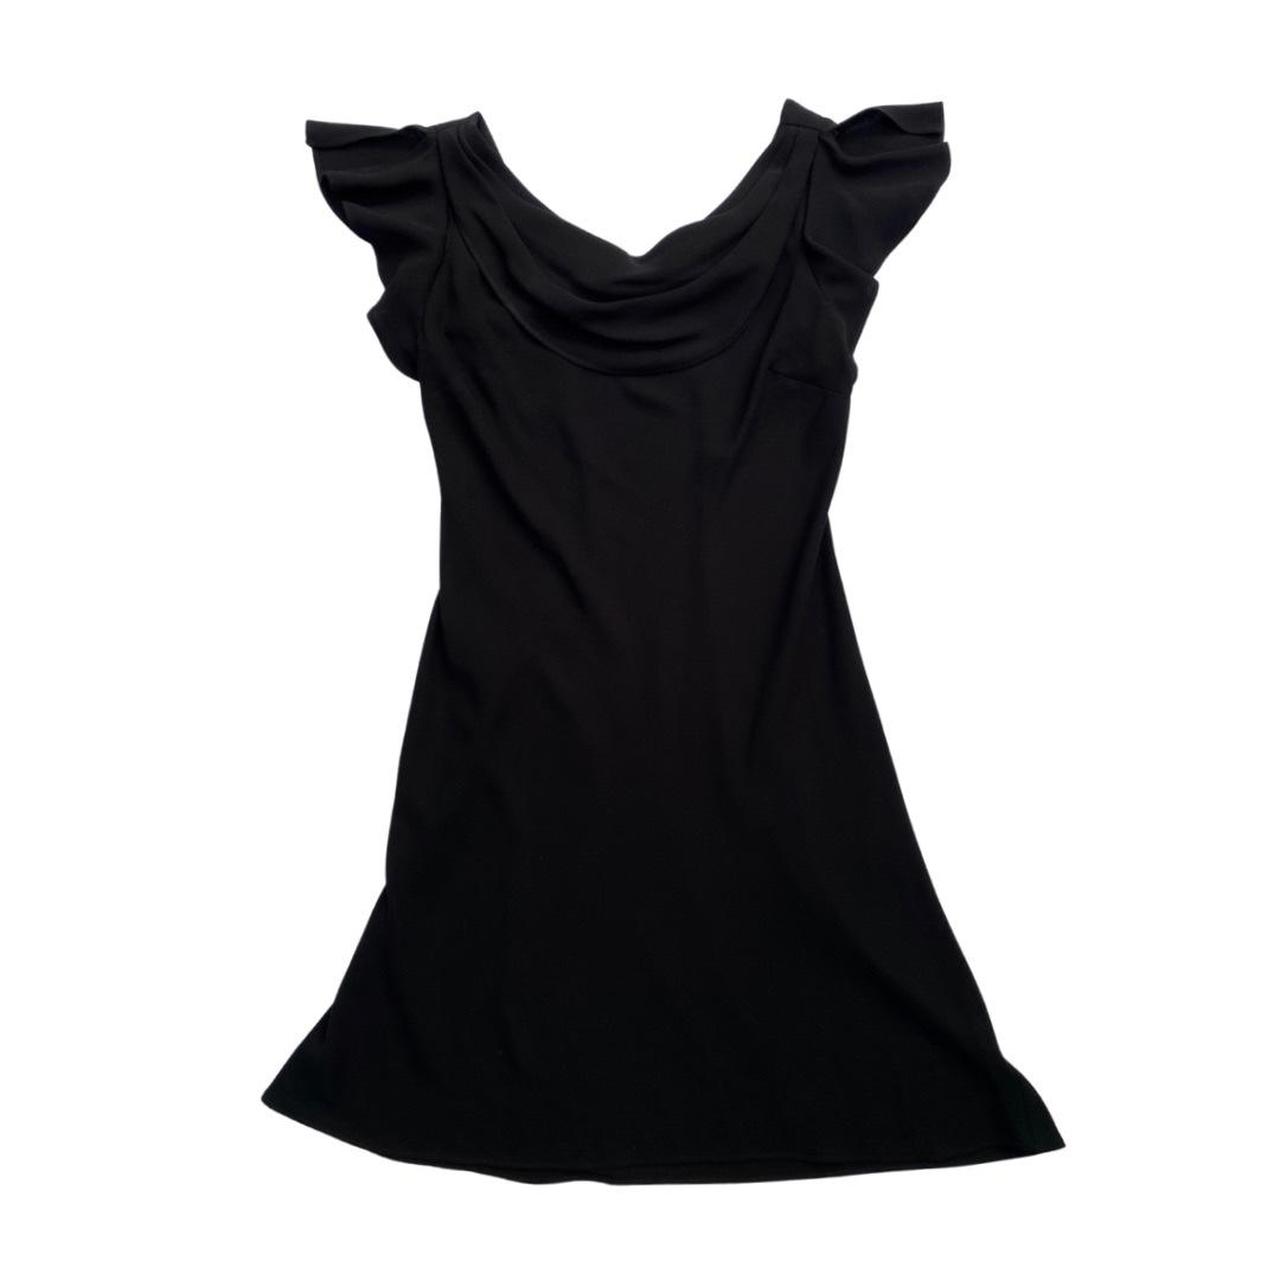 Vintage 90s flowy black dress 🖤 Size 12 and fits... - Depop